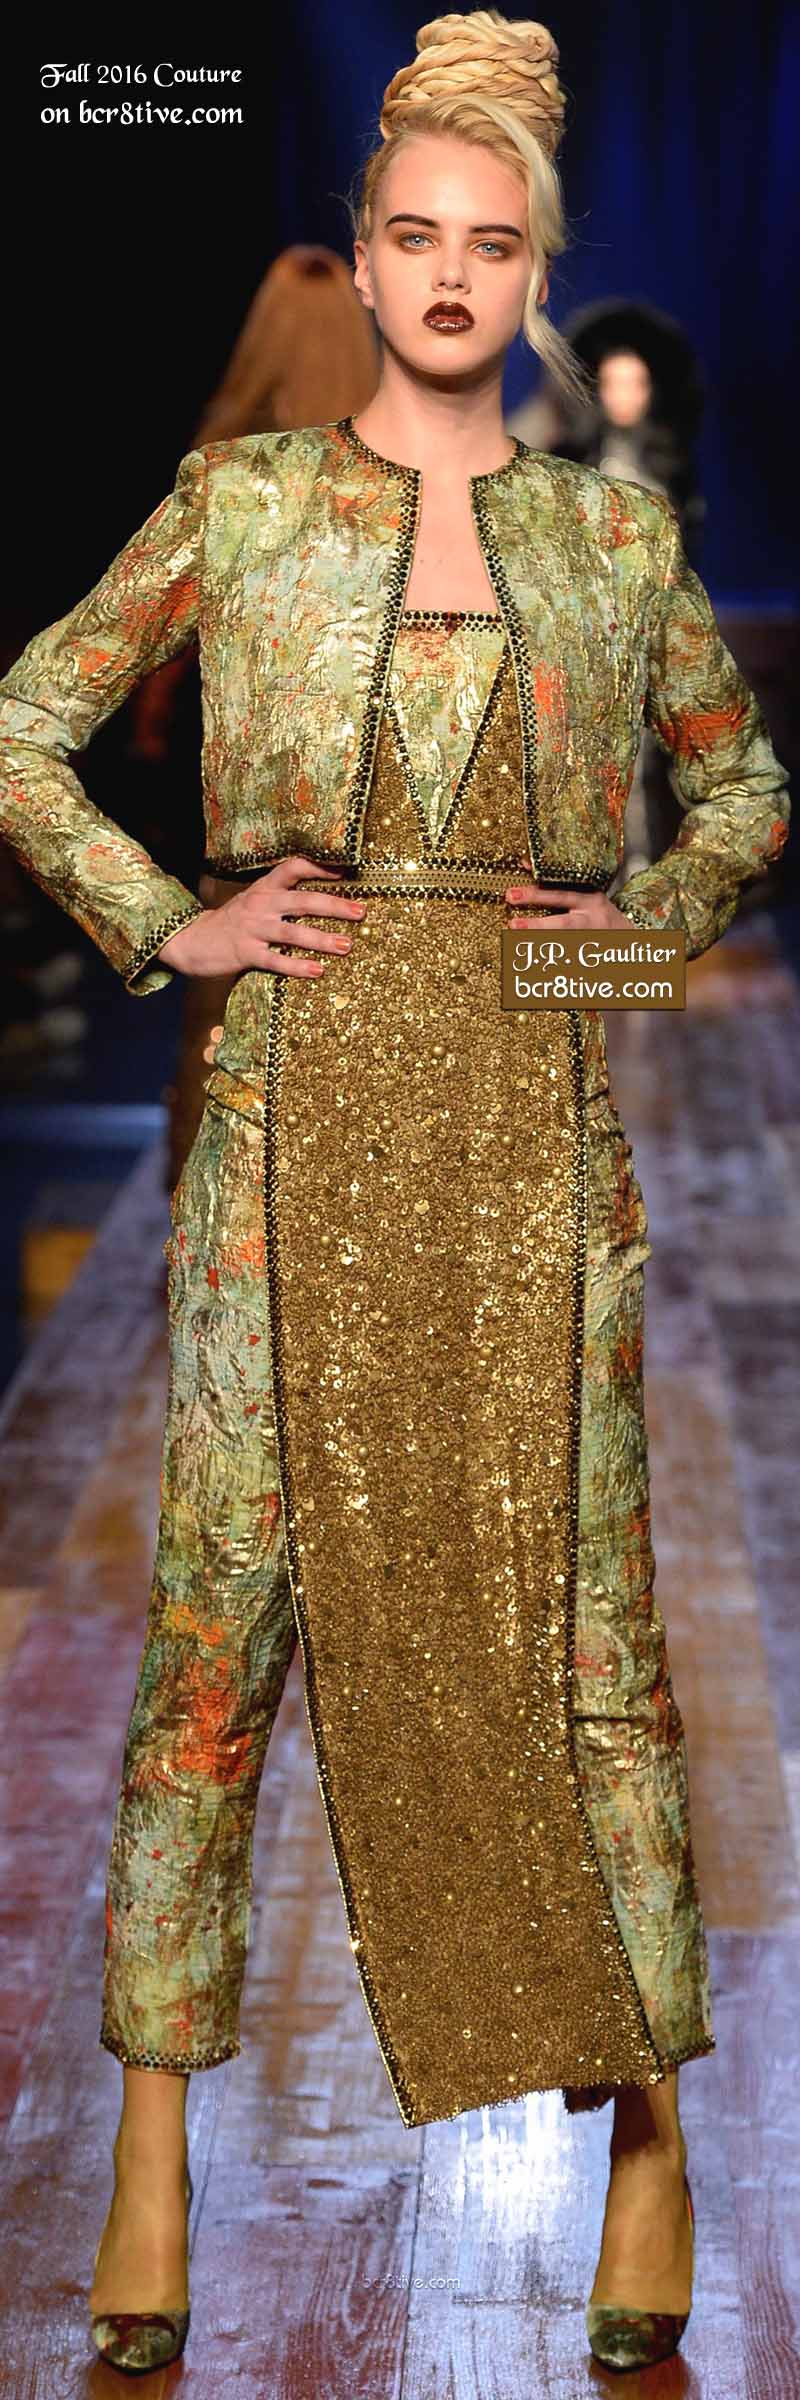 Jean Paul Gathier - The Best Fall 2016 Haute Couture Fashion